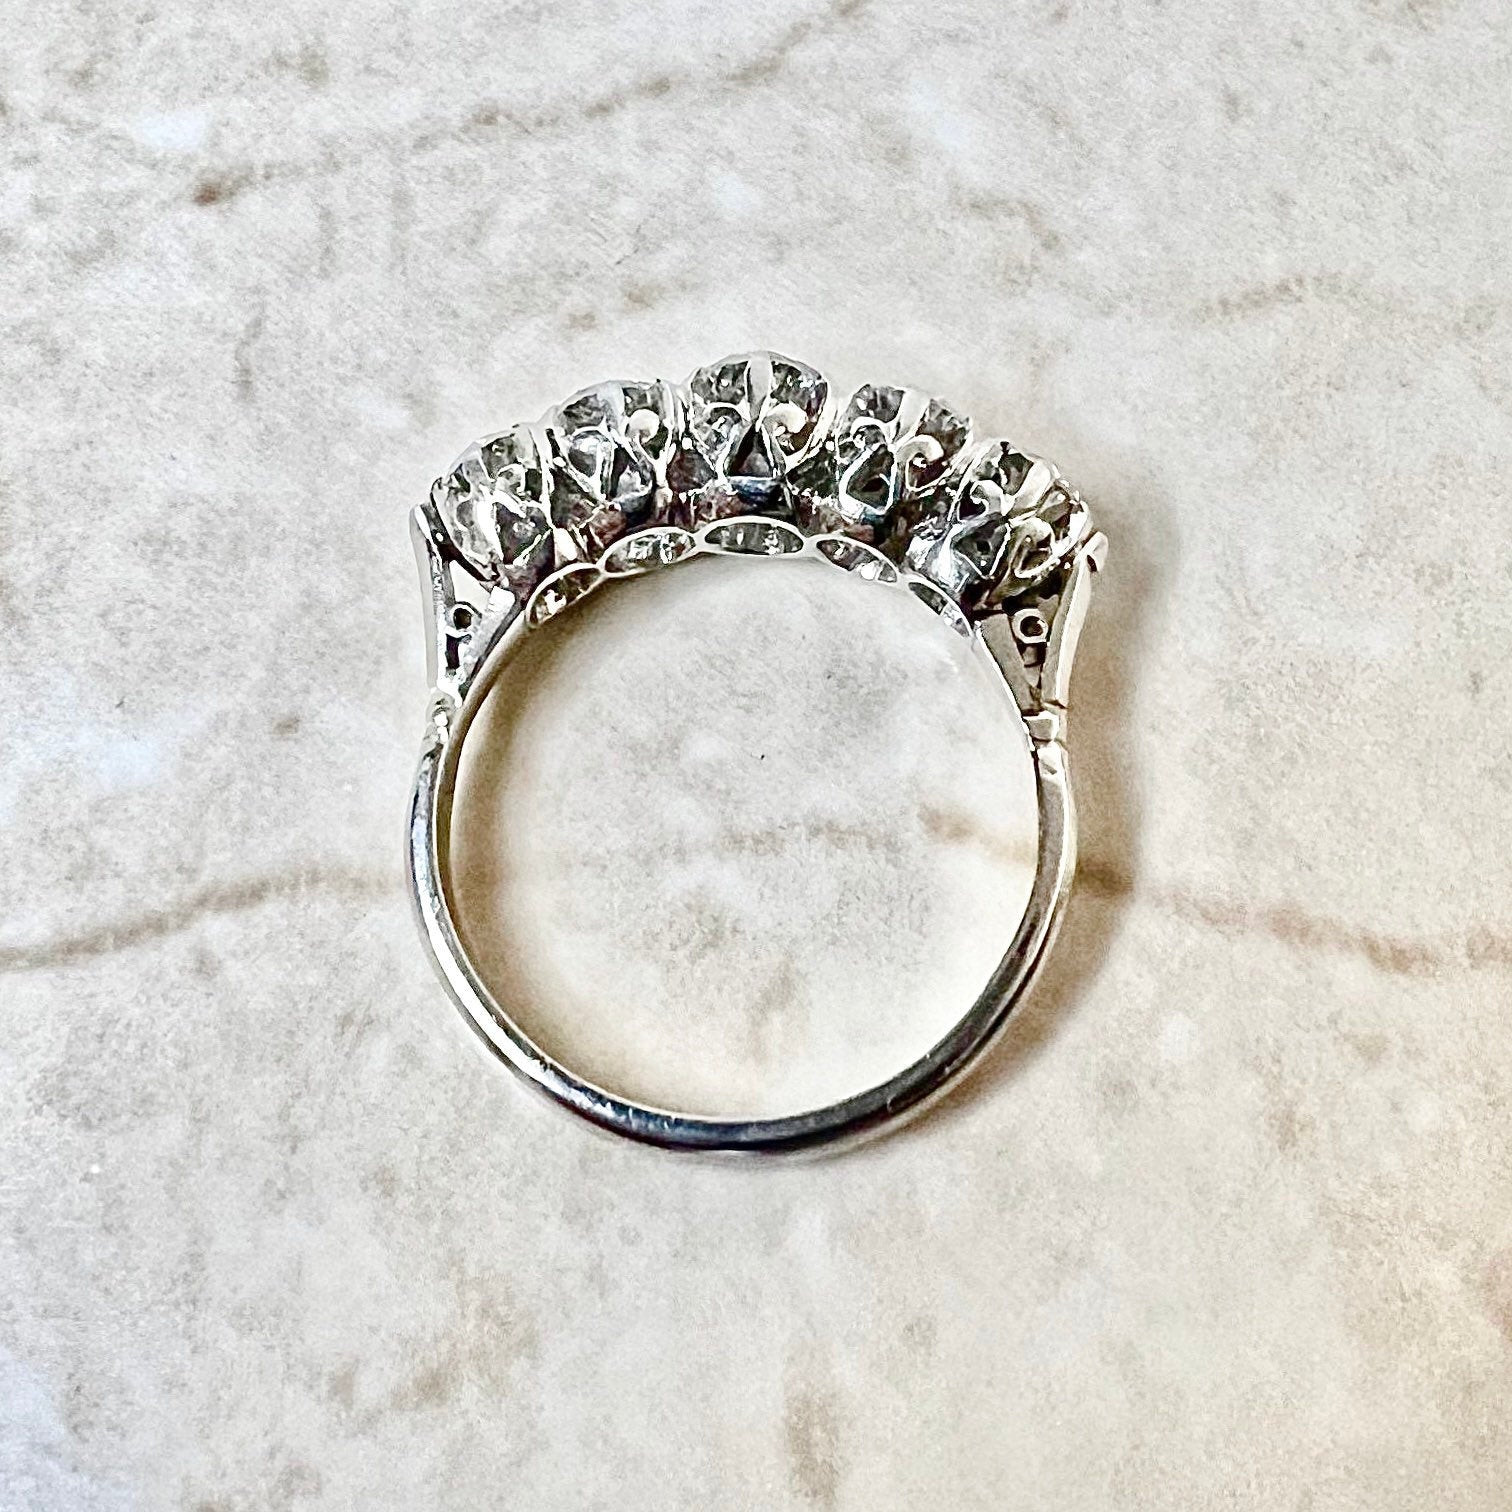 1.25 CT Vintage Platinum Diamond Band Ring - Platinum 5 Stone Ring - Diamond Ring - Anniversary Ring - Wedding Ring - Best Gifts For Her